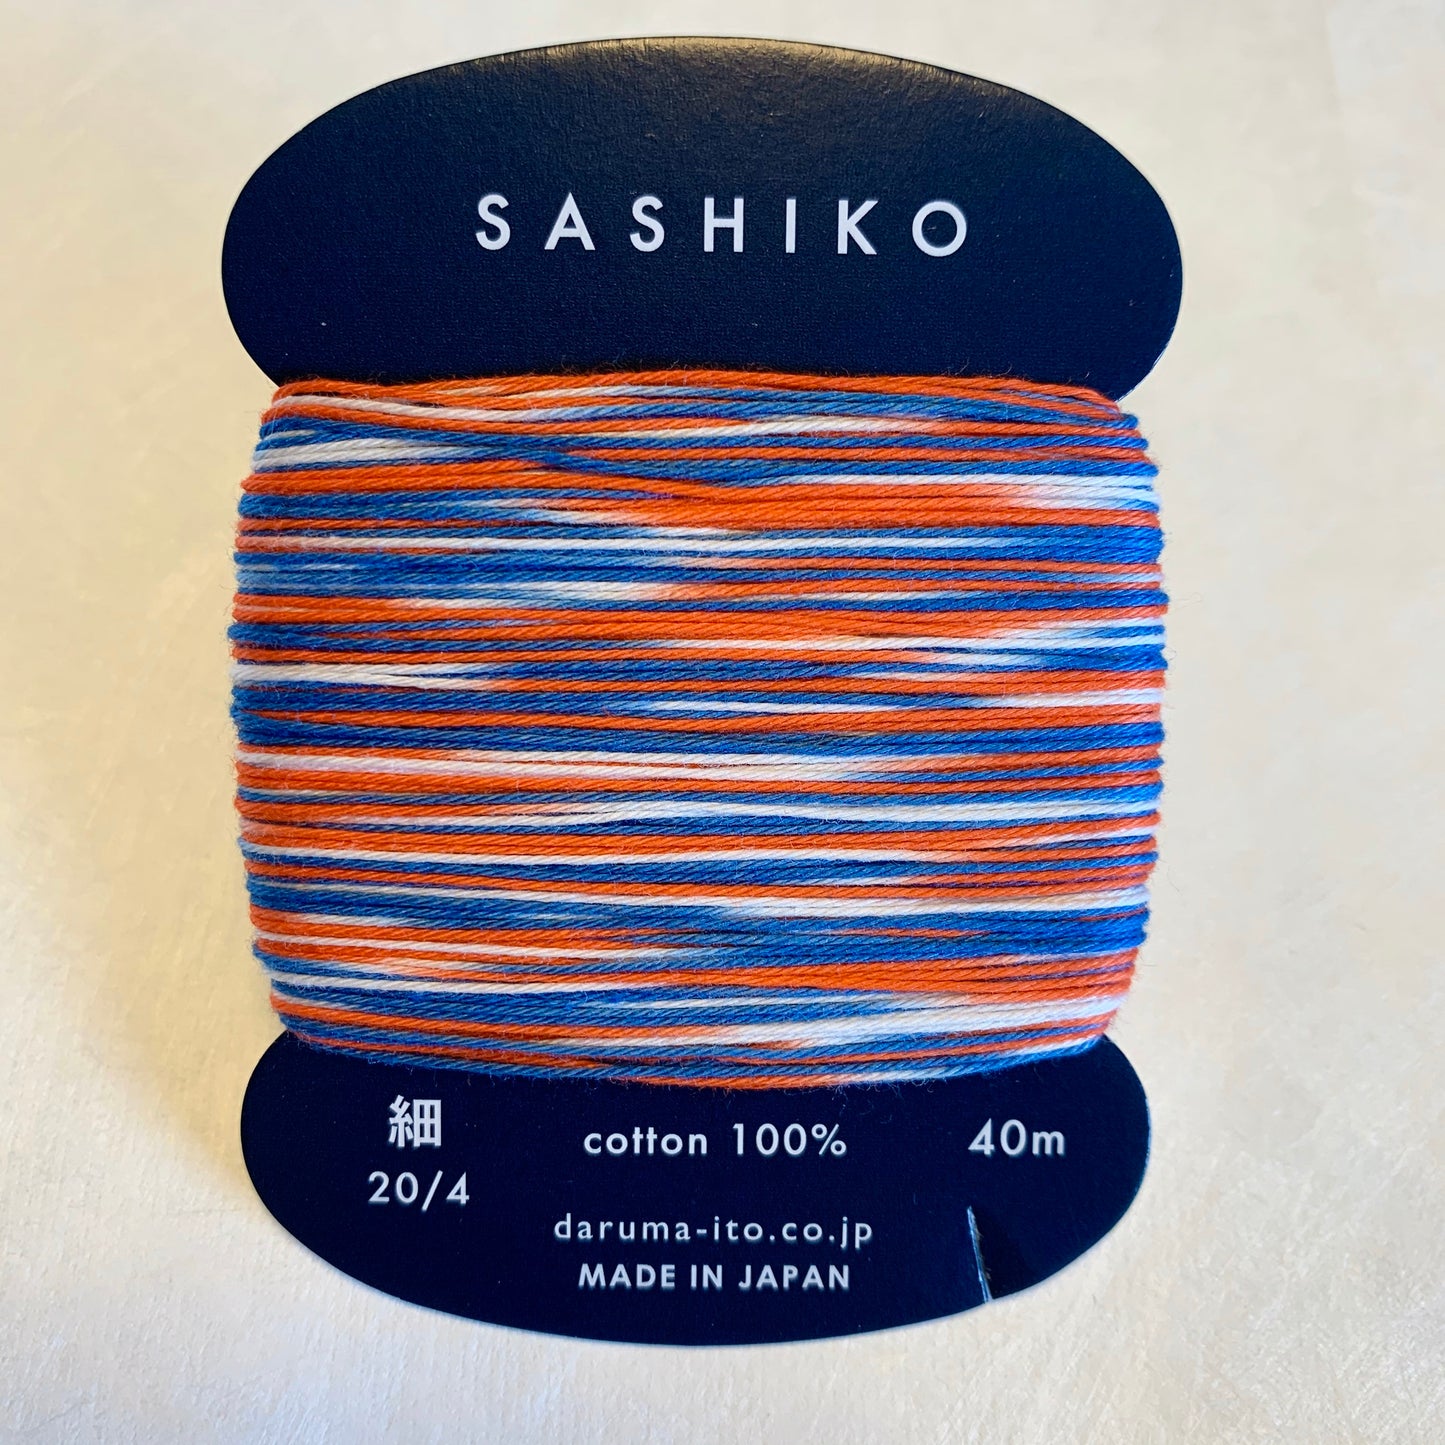 Daruma #401 "GOLDFISH SCOOPING" red white and blue Japanese Cotton SASHIKO thread 40 meter card 20/4